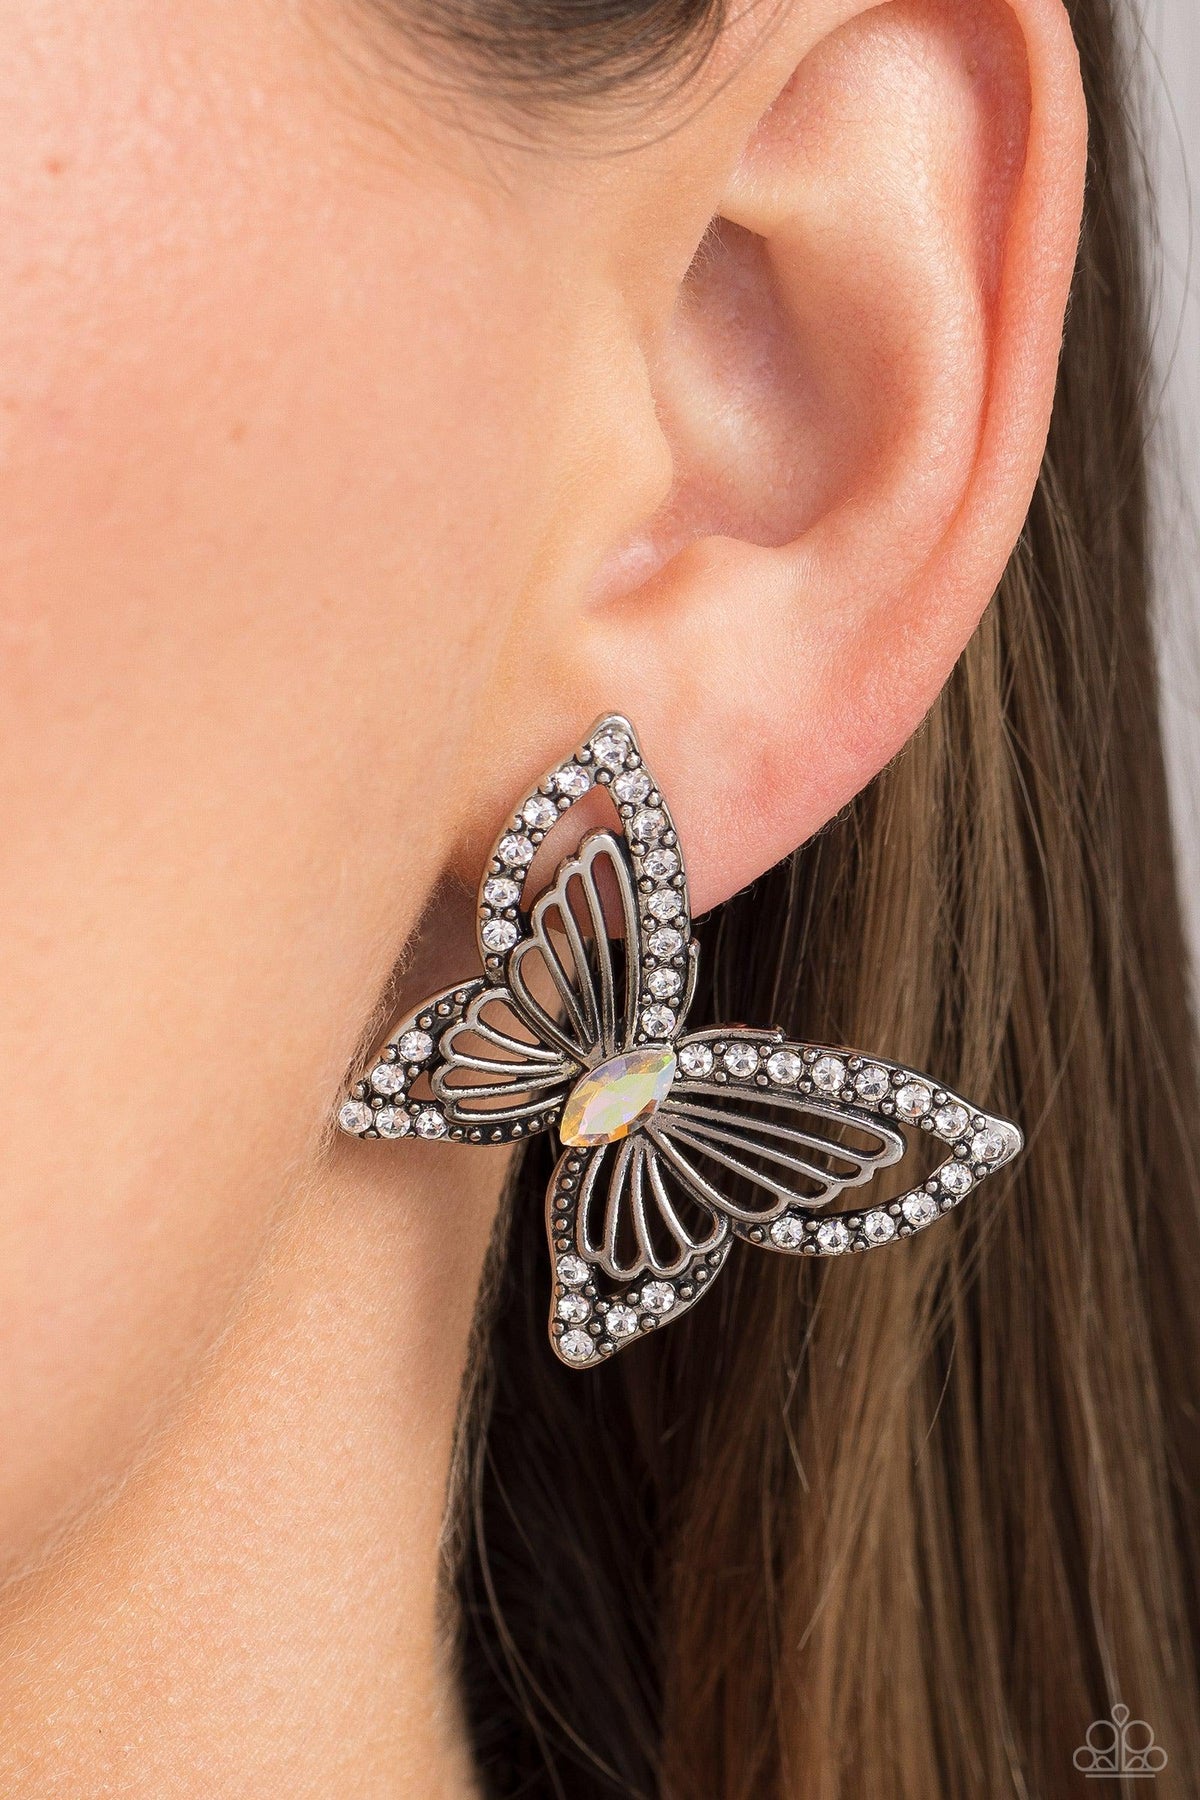 Wispy Wings Multi &amp; White Gem Butterfly Earrings - Paparazzi Accessories-on model - CarasShop.com - $5 Jewelry by Cara Jewels